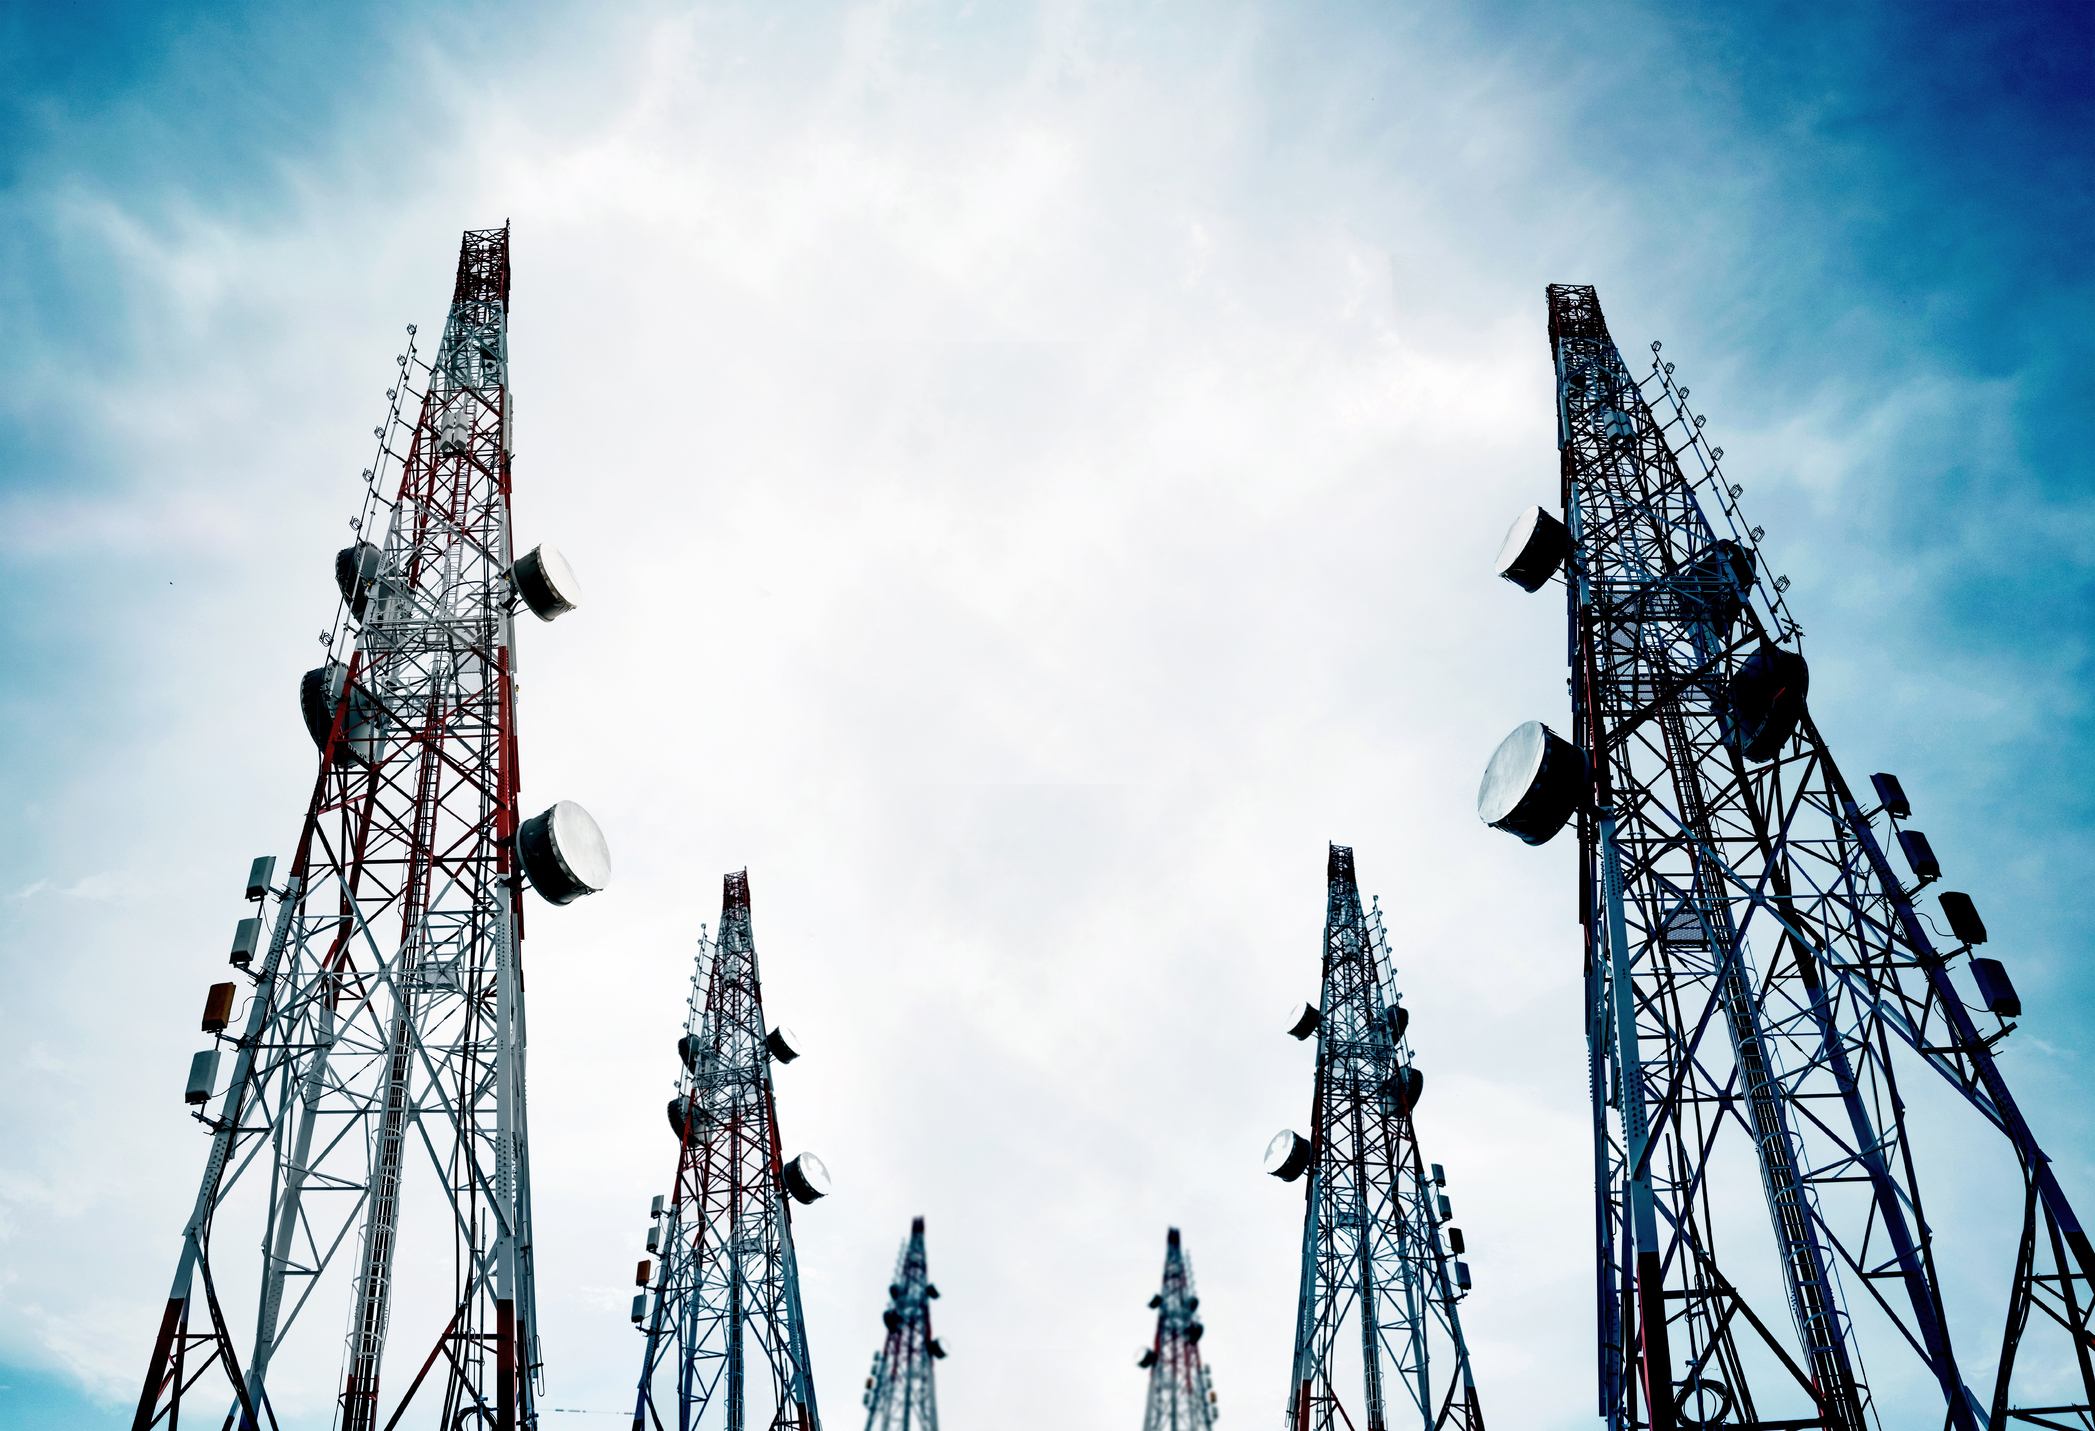 More information about "H ανθεκτικότητα και η επέκταση των δικτύων, κορυφαία πρόκληση για τα telecoms"